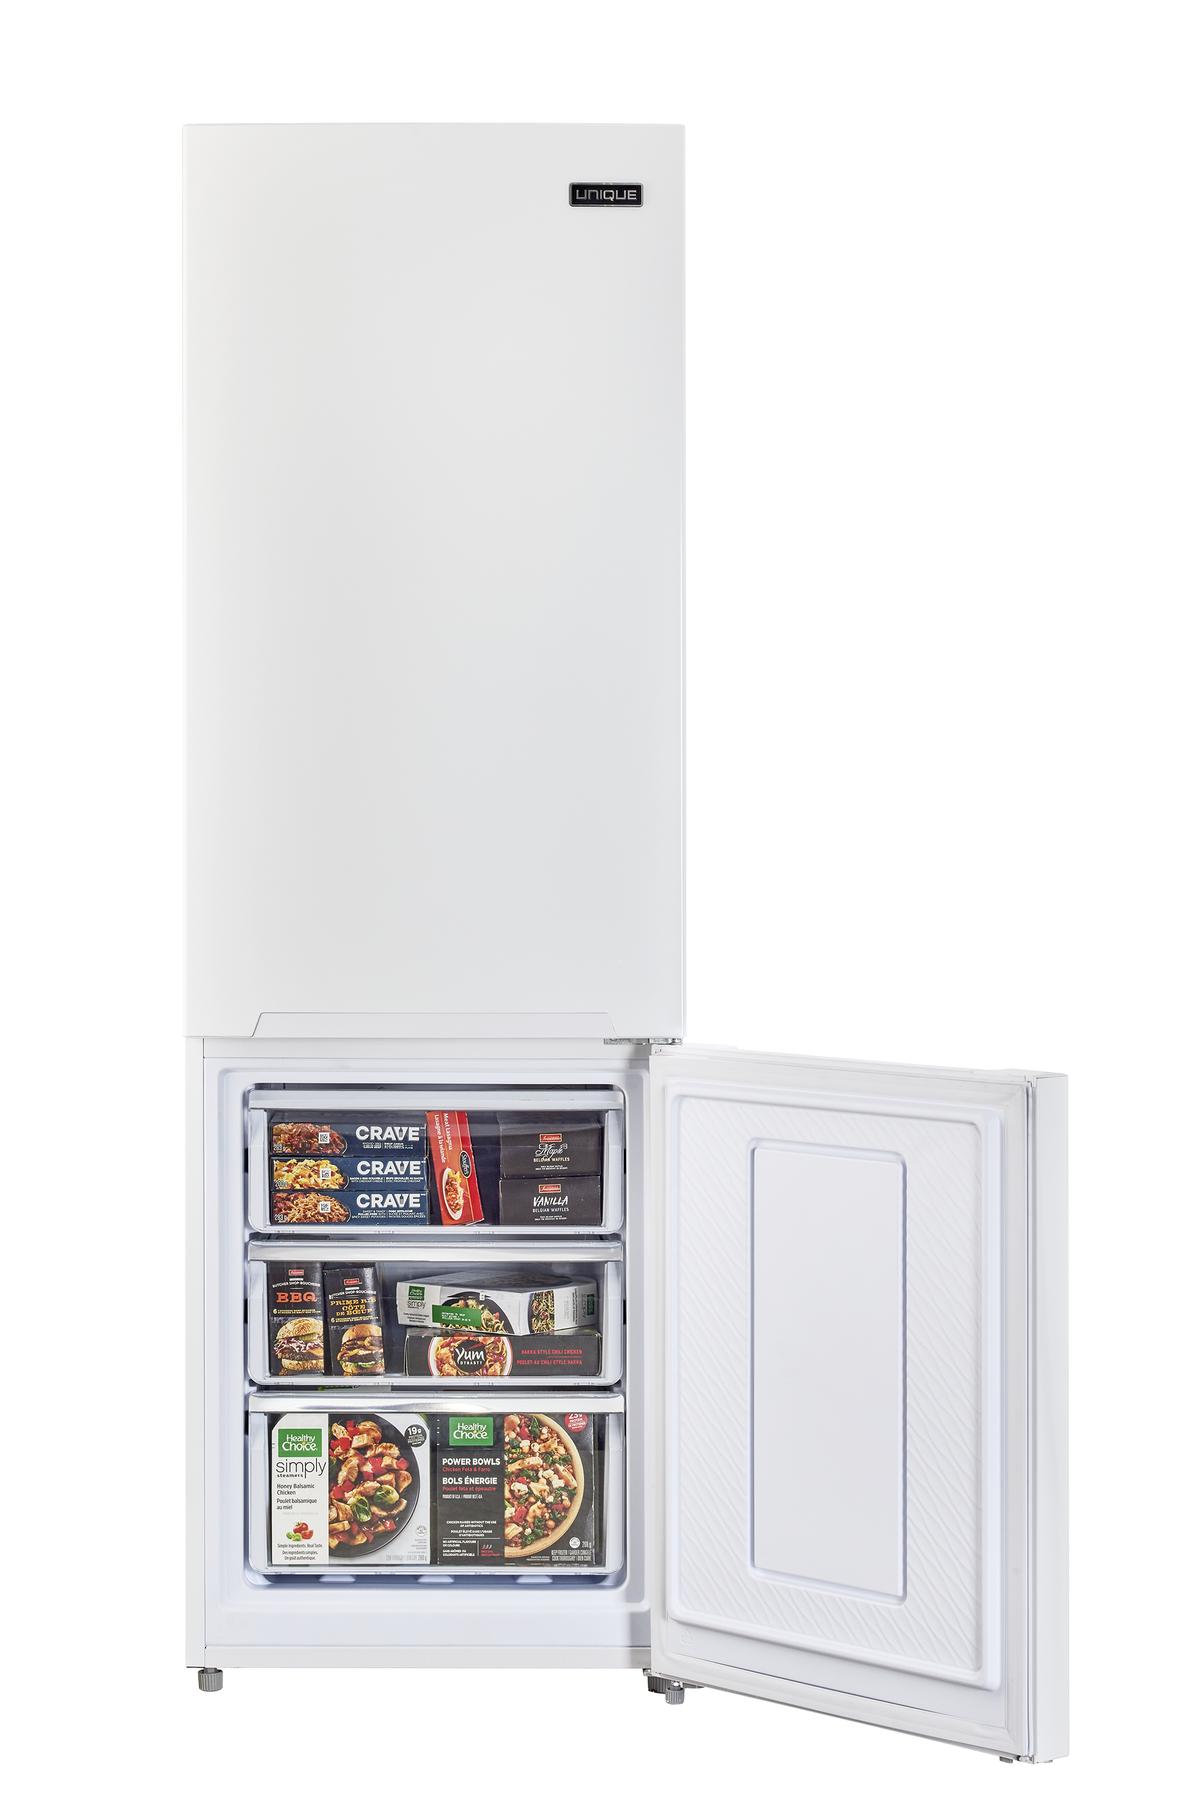 Unique 325Litre White 12/24 DC Bottom Mount Refrigerator